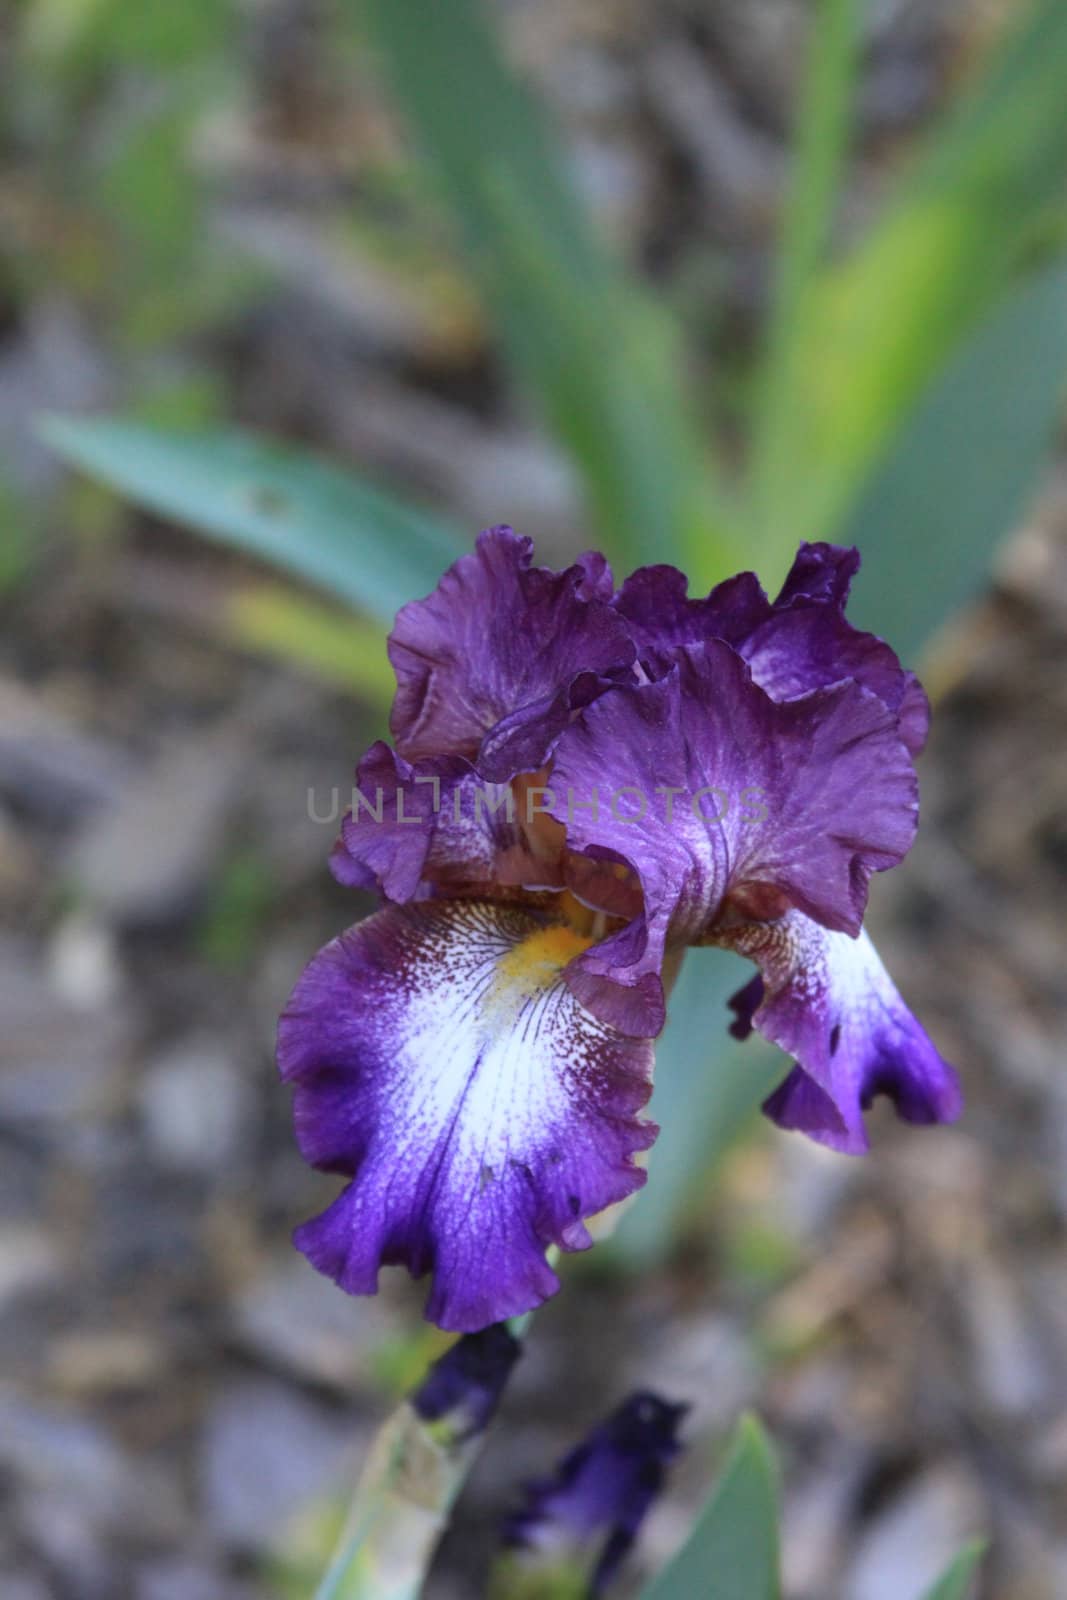 Iris flower on a sunny day.